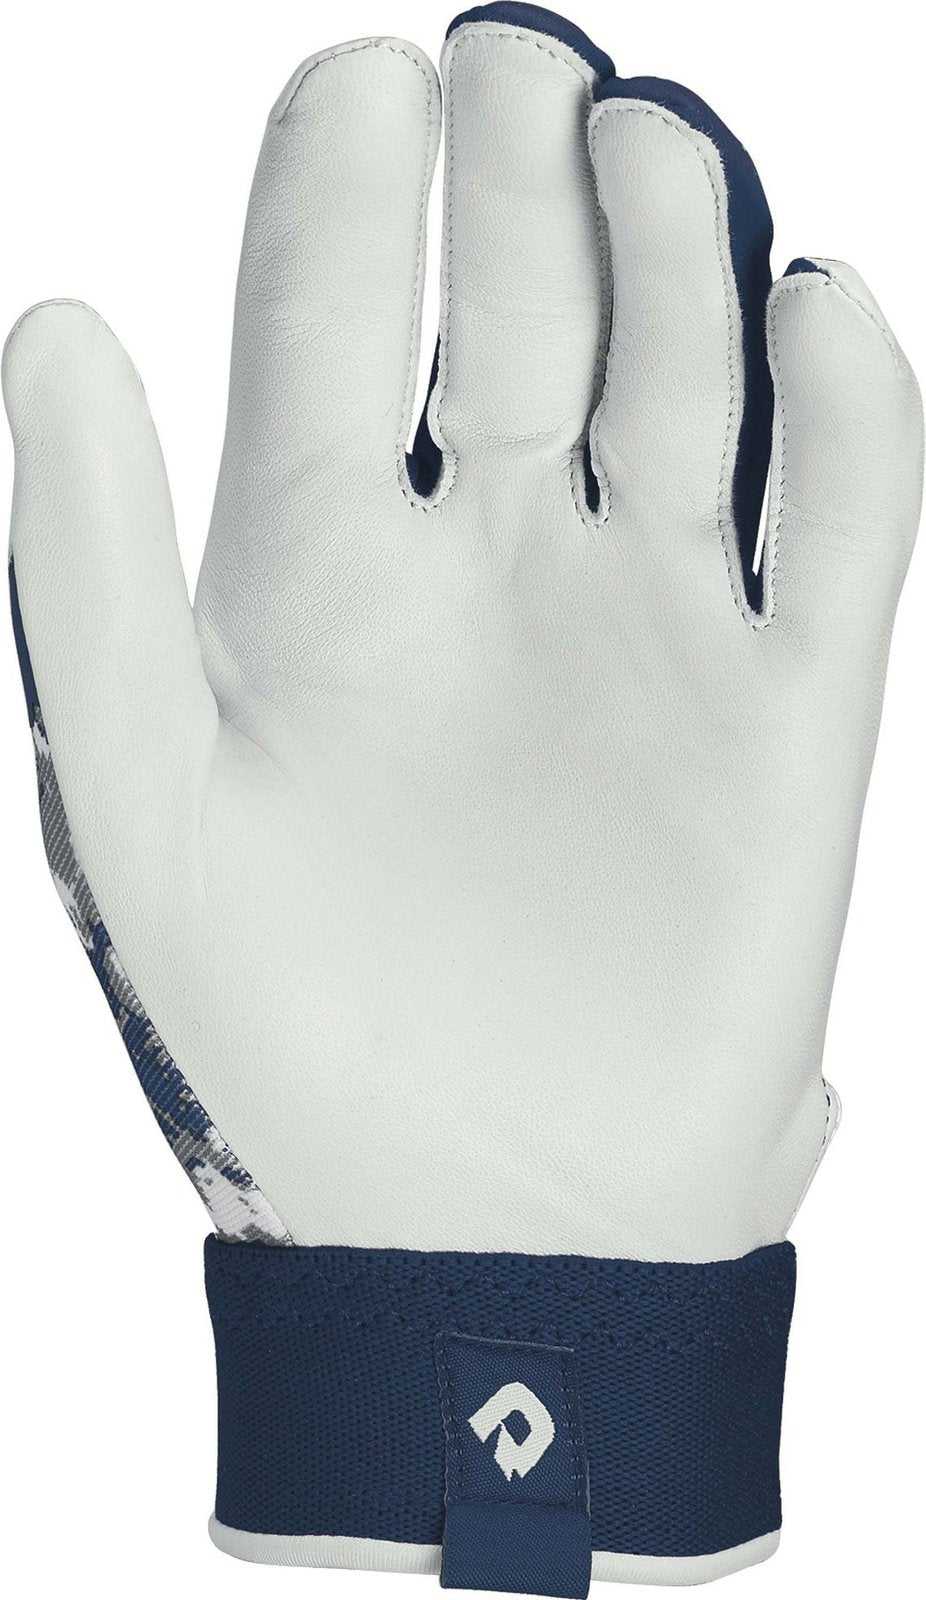 DeMarini Digi Camo II Adult Batting Gloves - Navy Camo - HIT A Double